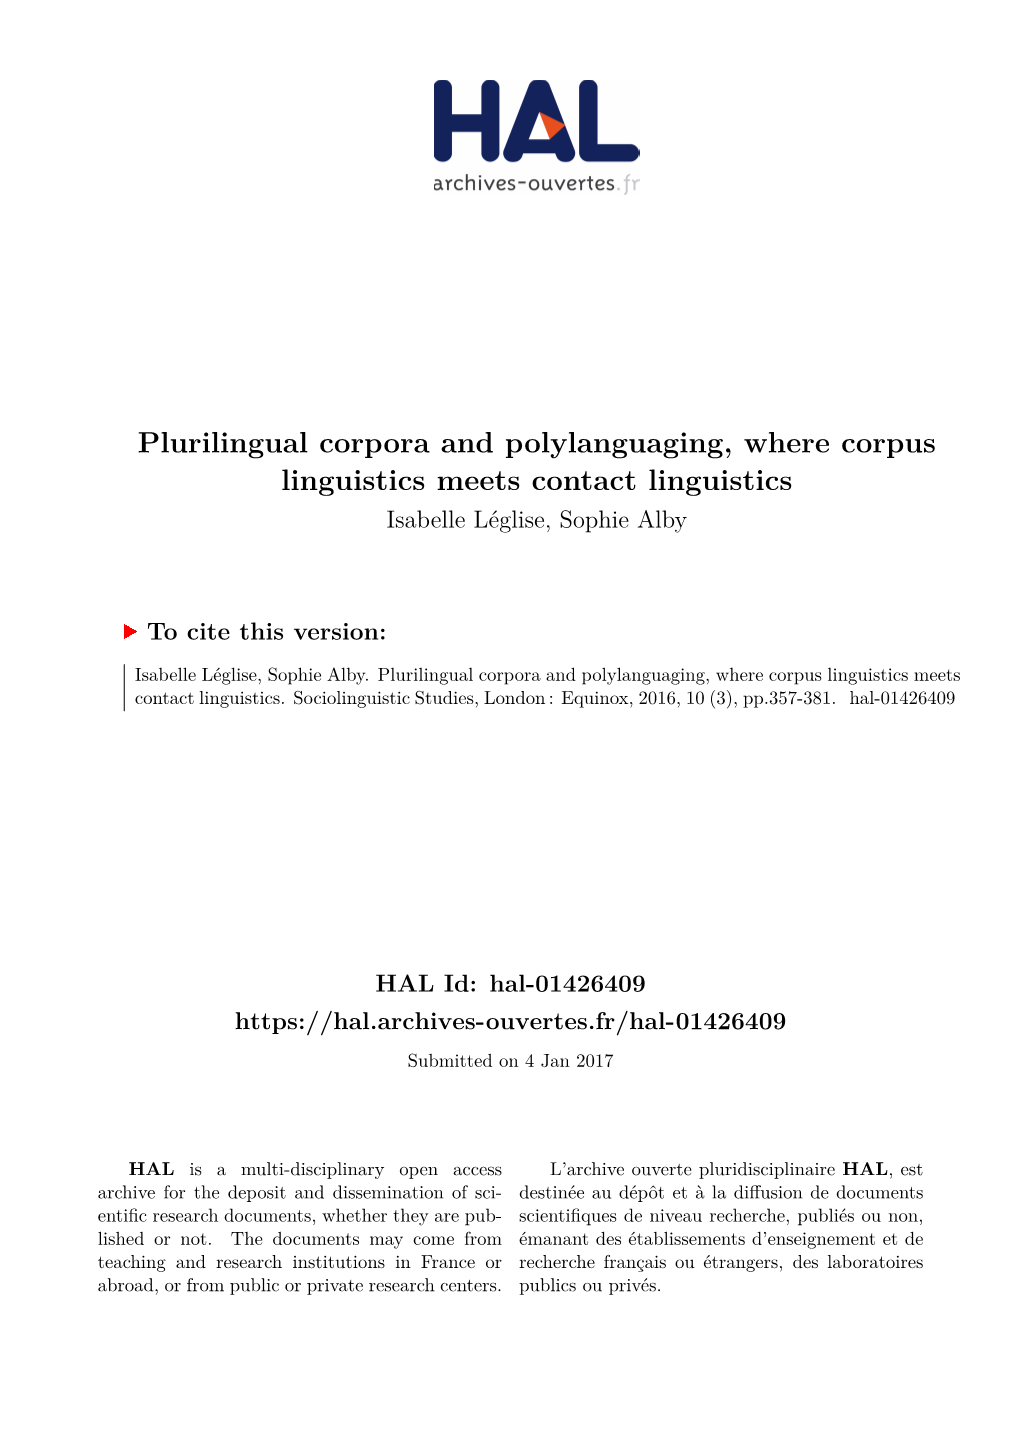 Plurilingual Corpora and Polylanguaging, Where Corpus Linguistics Meets Contact Linguistics Isabelle Léglise, Sophie Alby